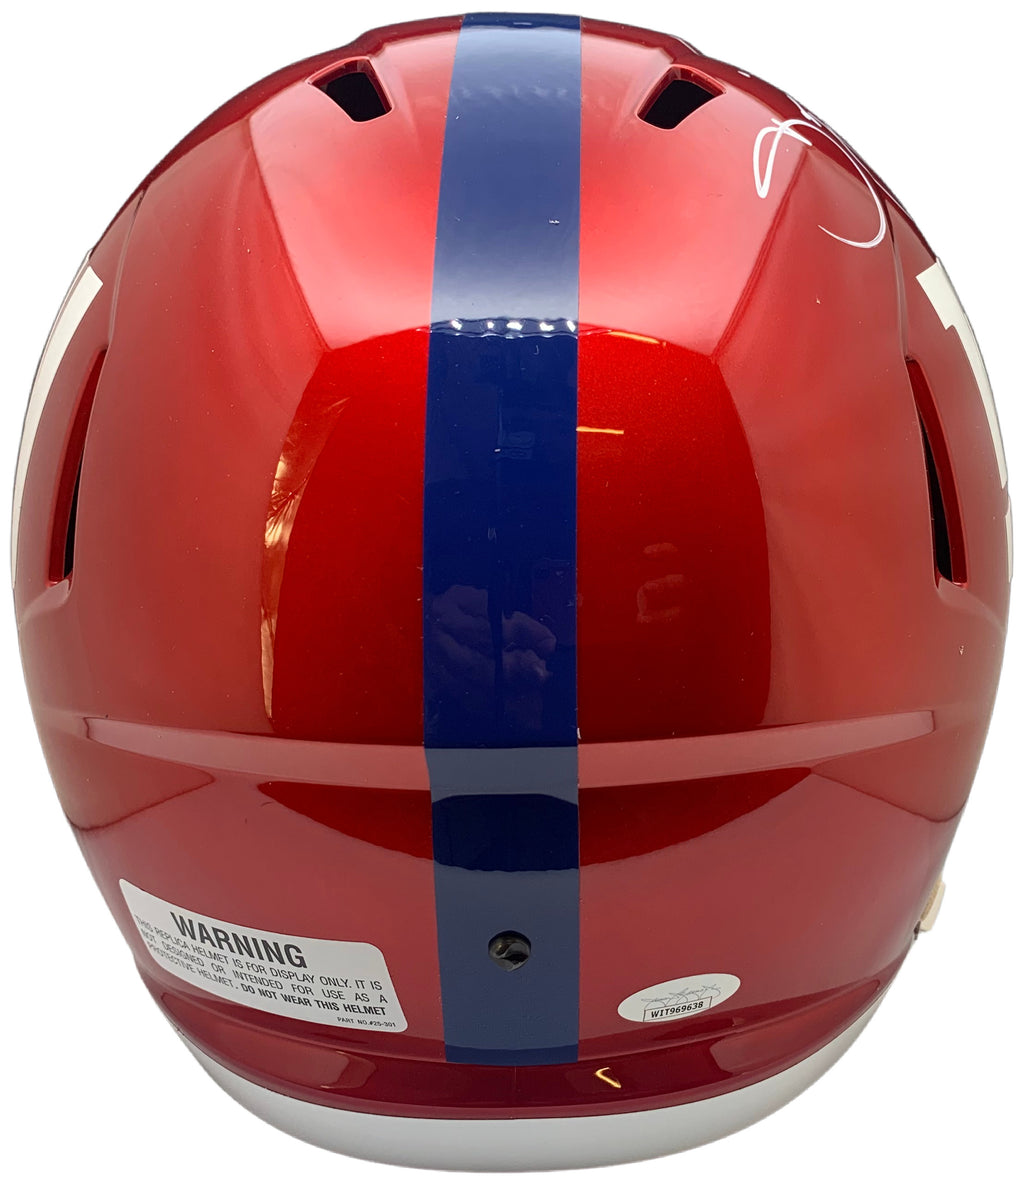 David Tyree autographed signed inscribed Flash Mini Helmet New York Giants JSA